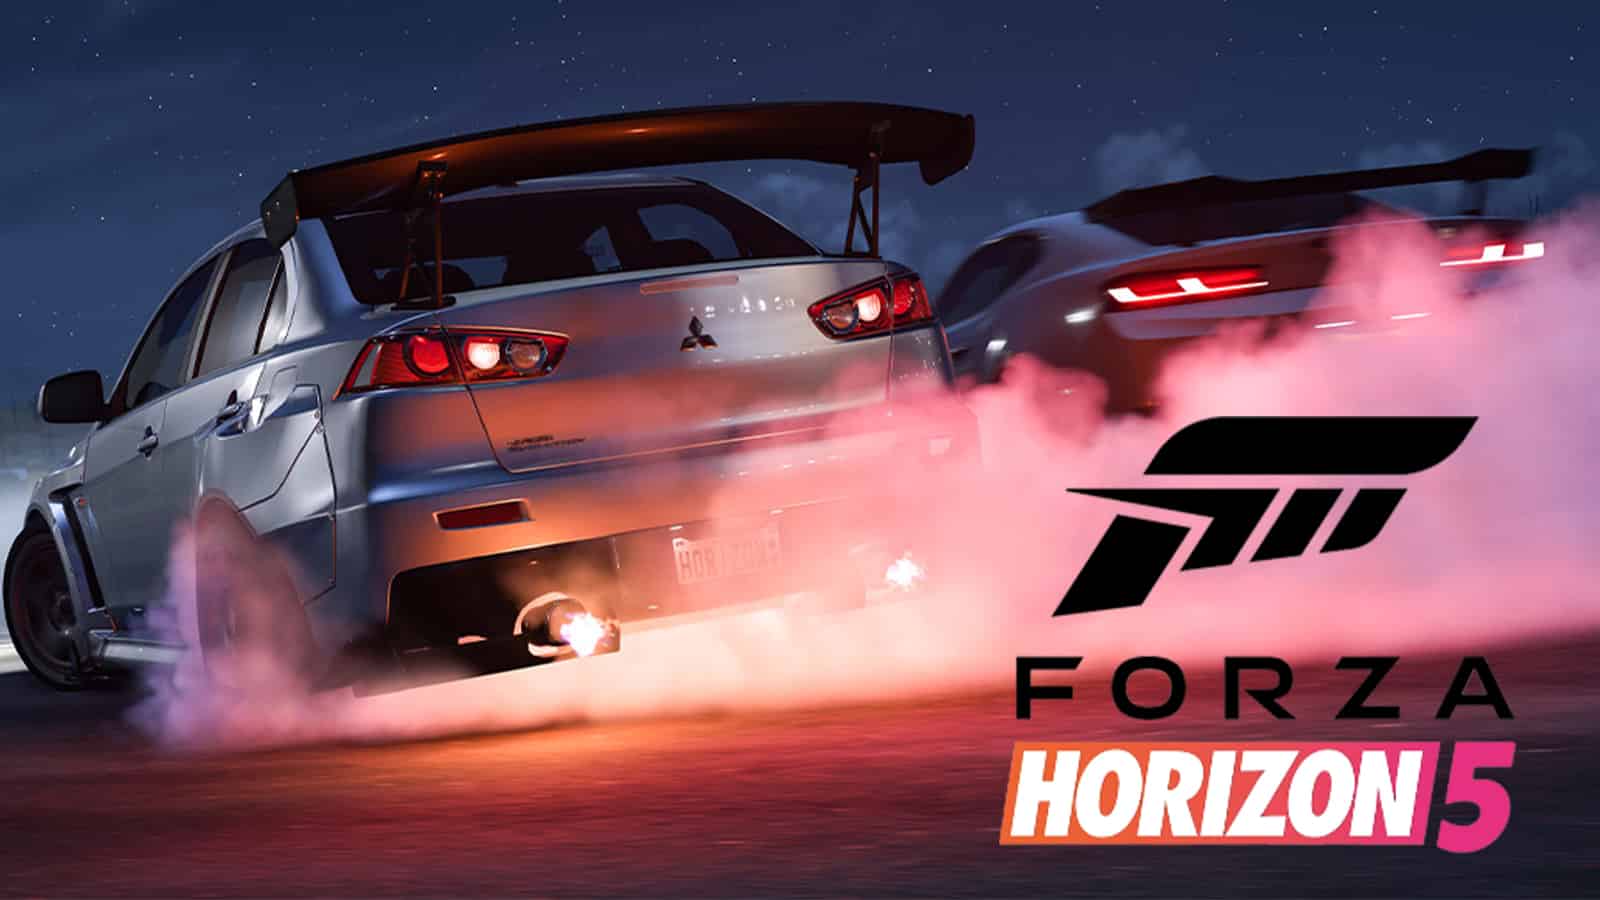 How to earn Barrel Roll Skill in Forza Horizon 5 